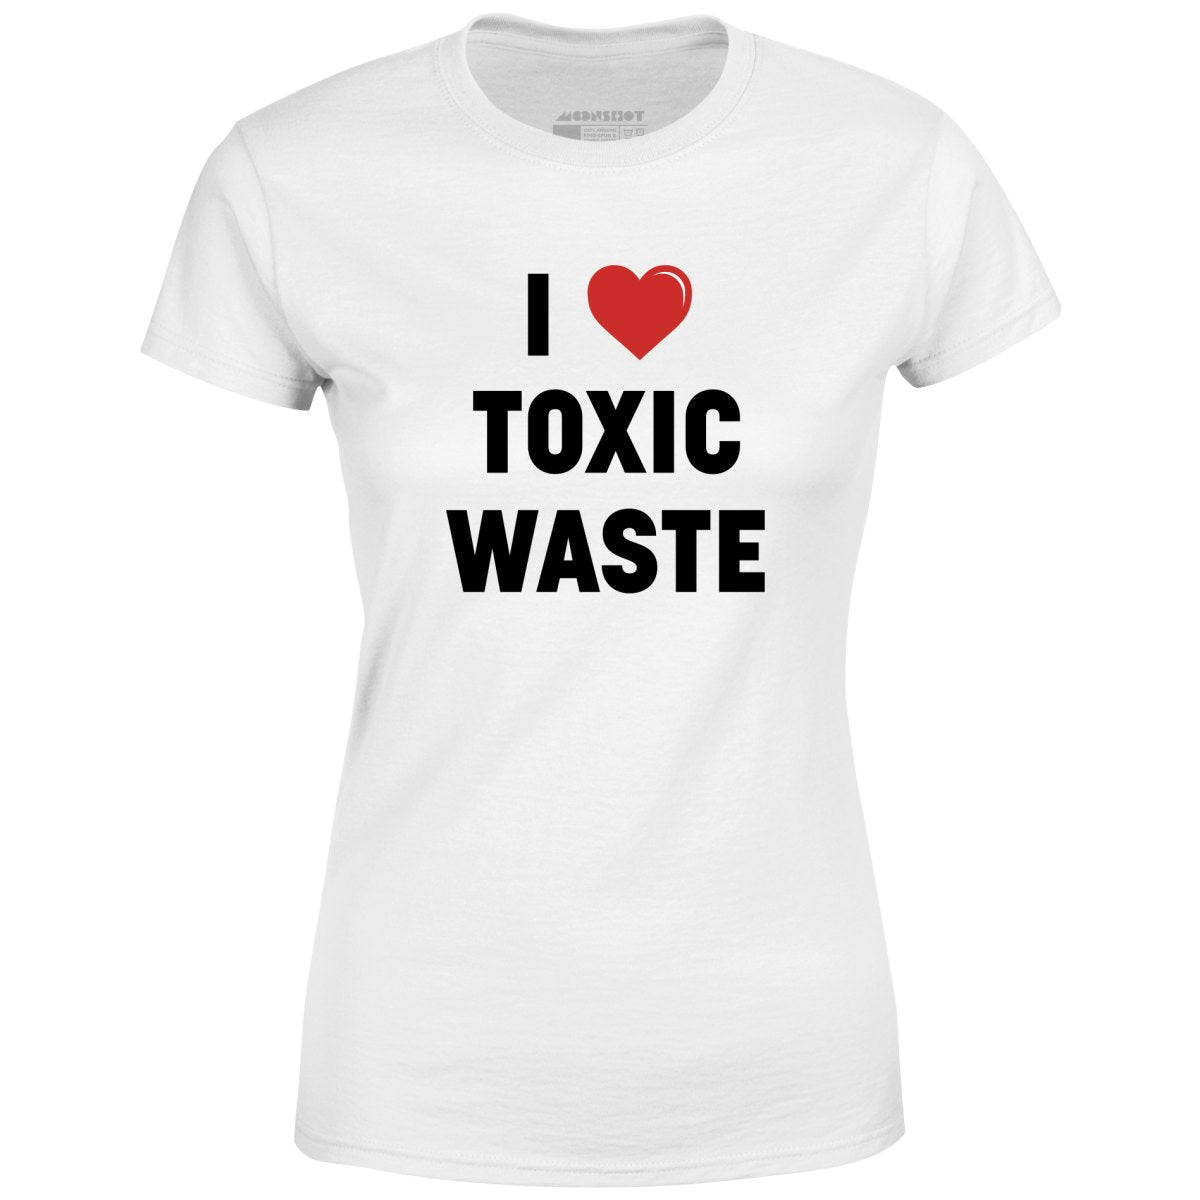 I Love Toxic Waste - Women's T-Shirt